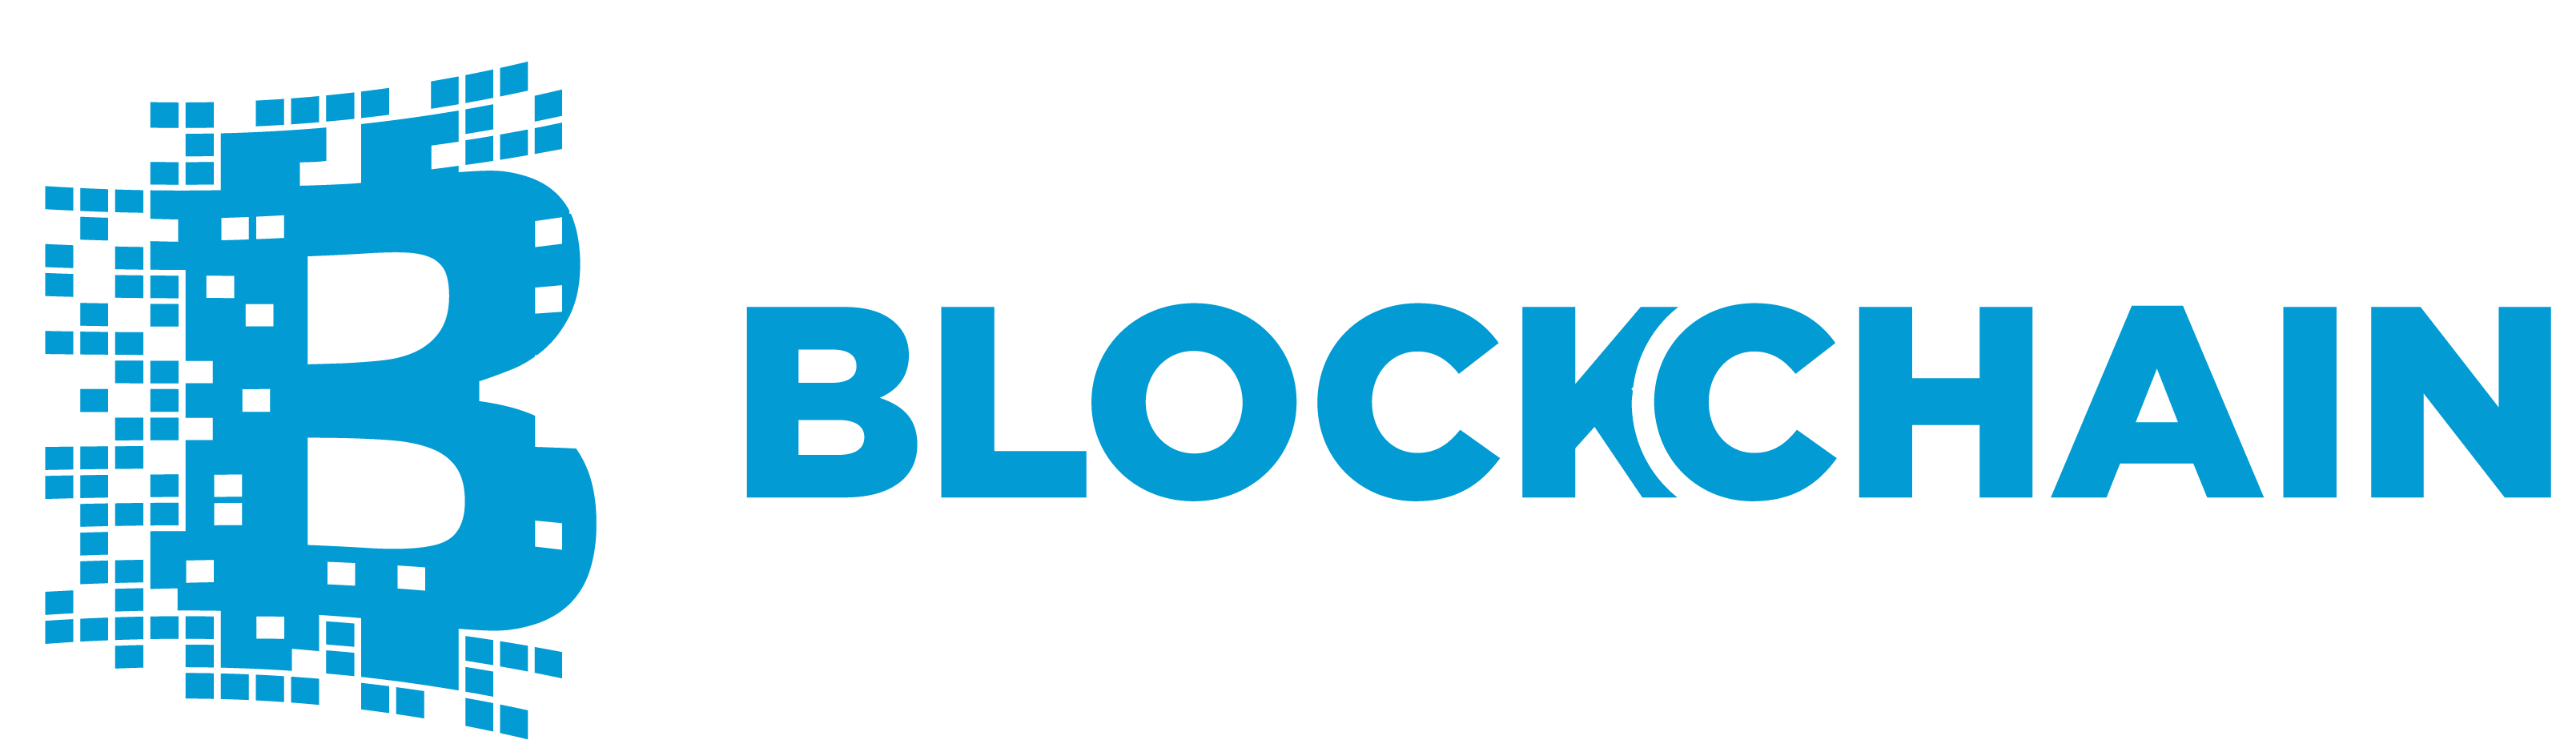 Blockchain's logo